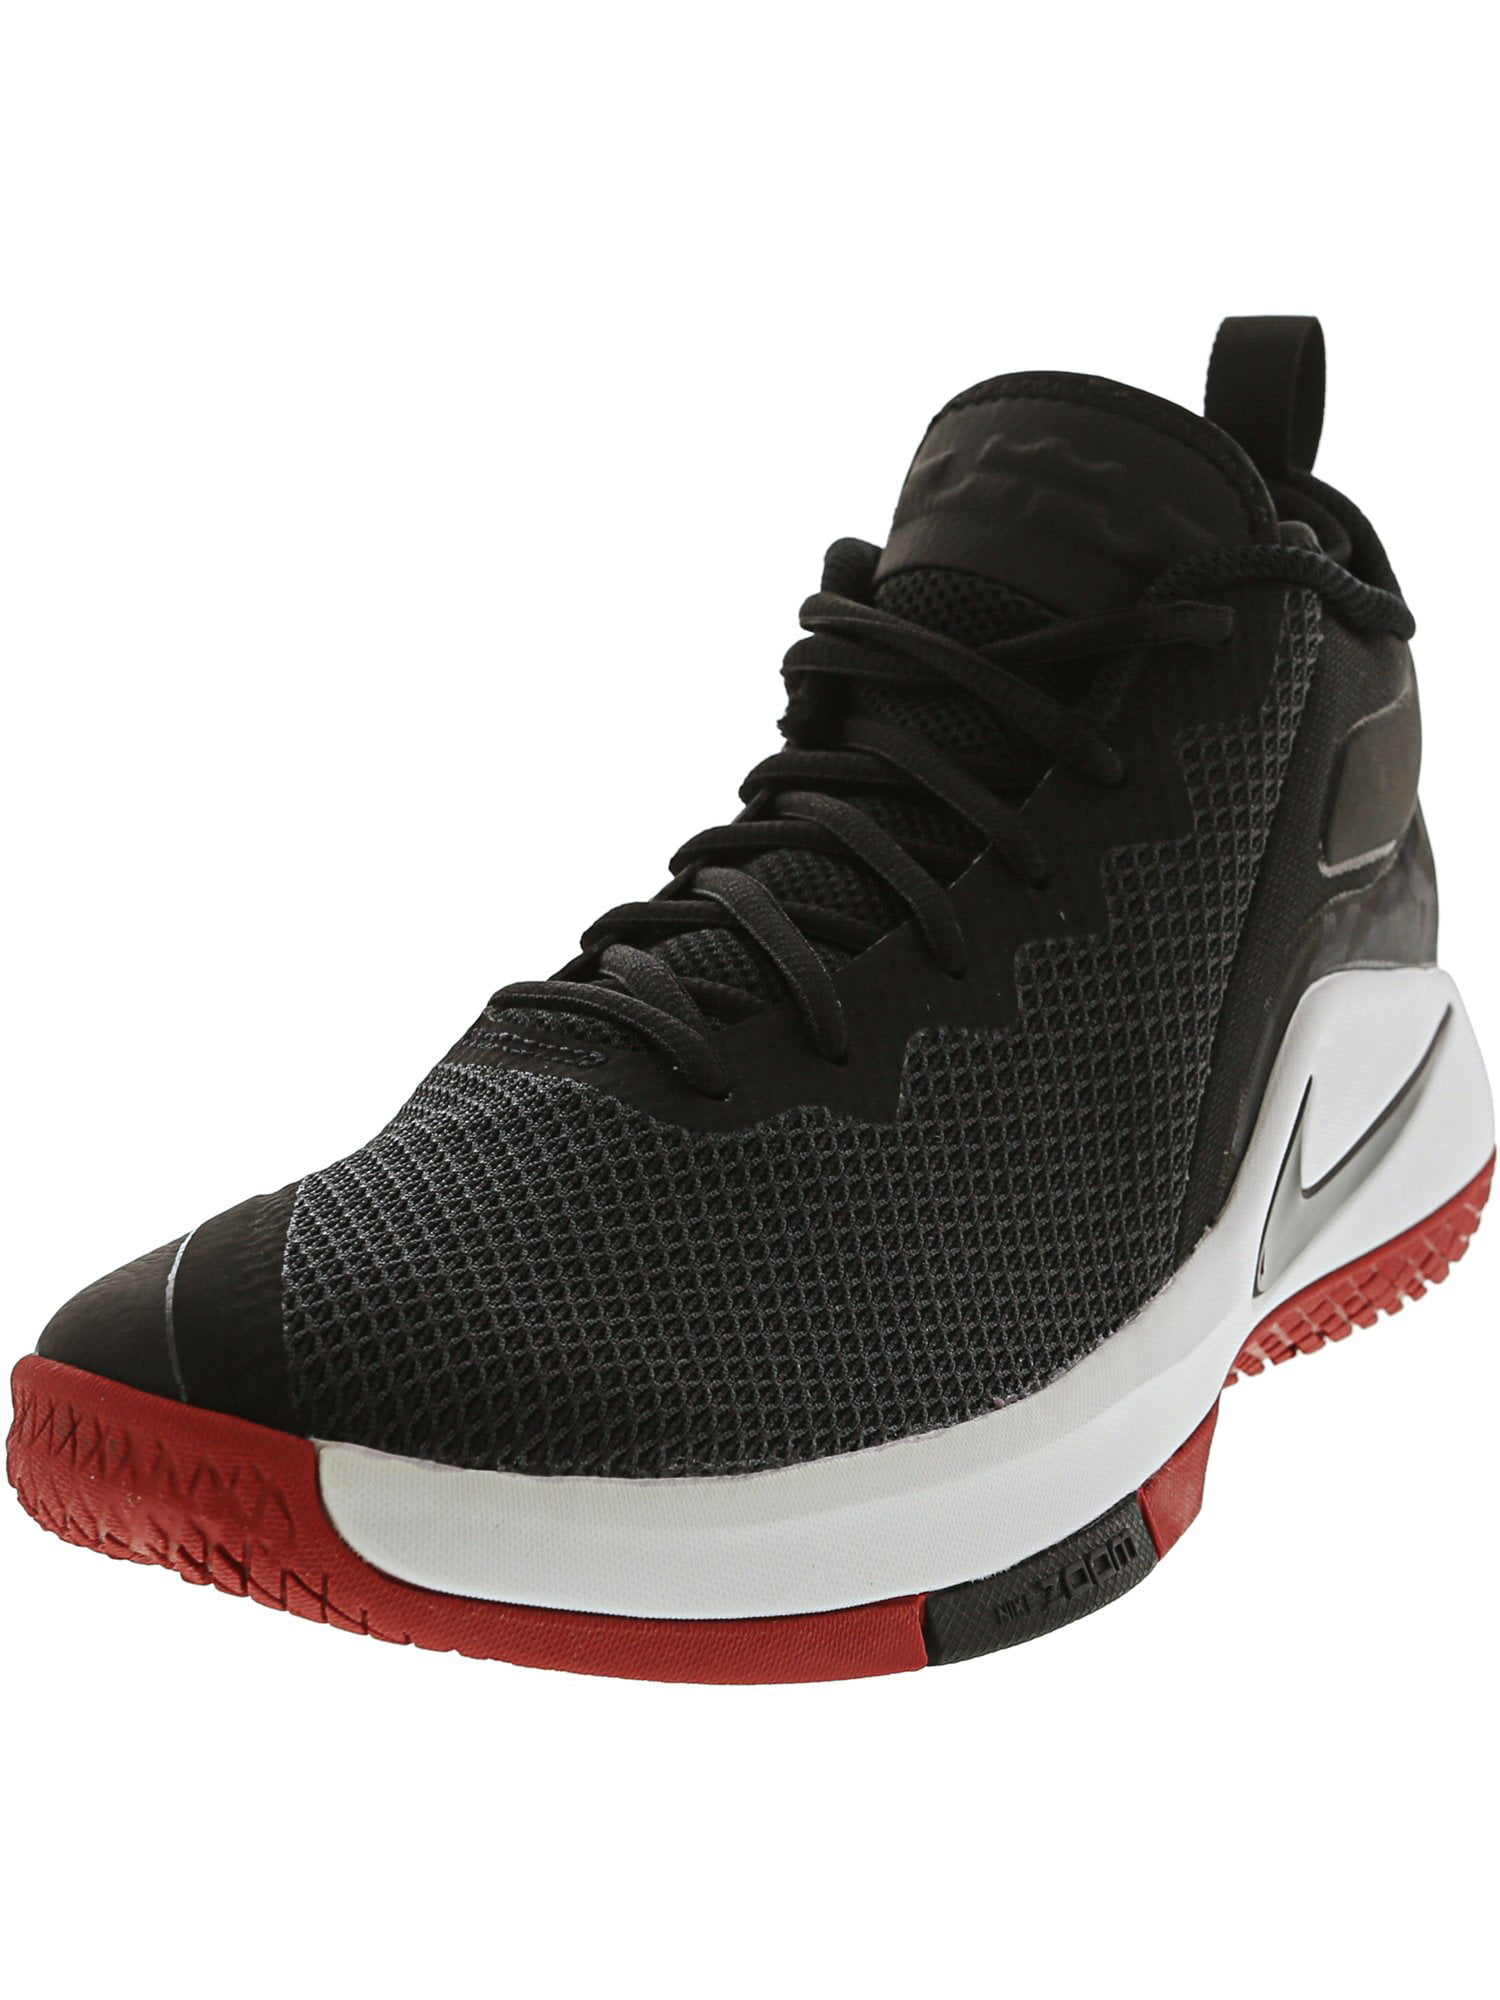 Planeta taller Grapa Nike Men's Lebron Witness Ii Black / - White Gym Red Ankle-High Basketball  Shoe 10M - Walmart.com